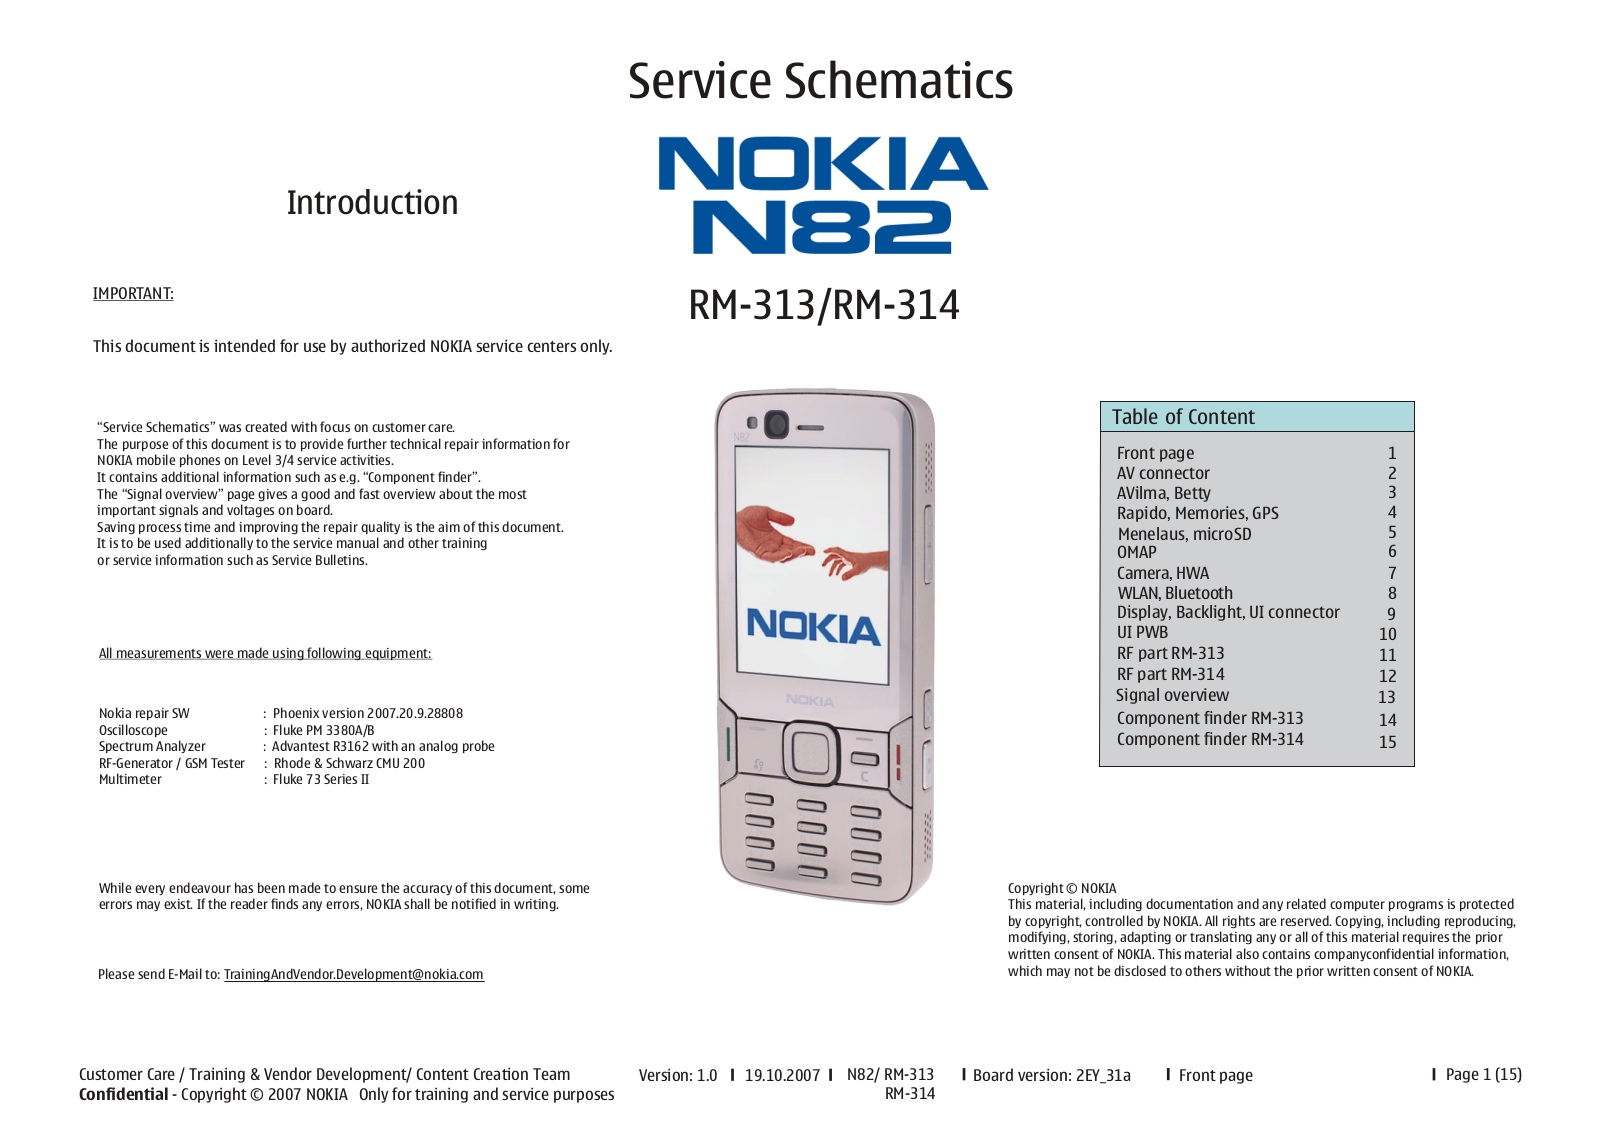 Nokia N82 RM-313, N82  RM-314 Schematic